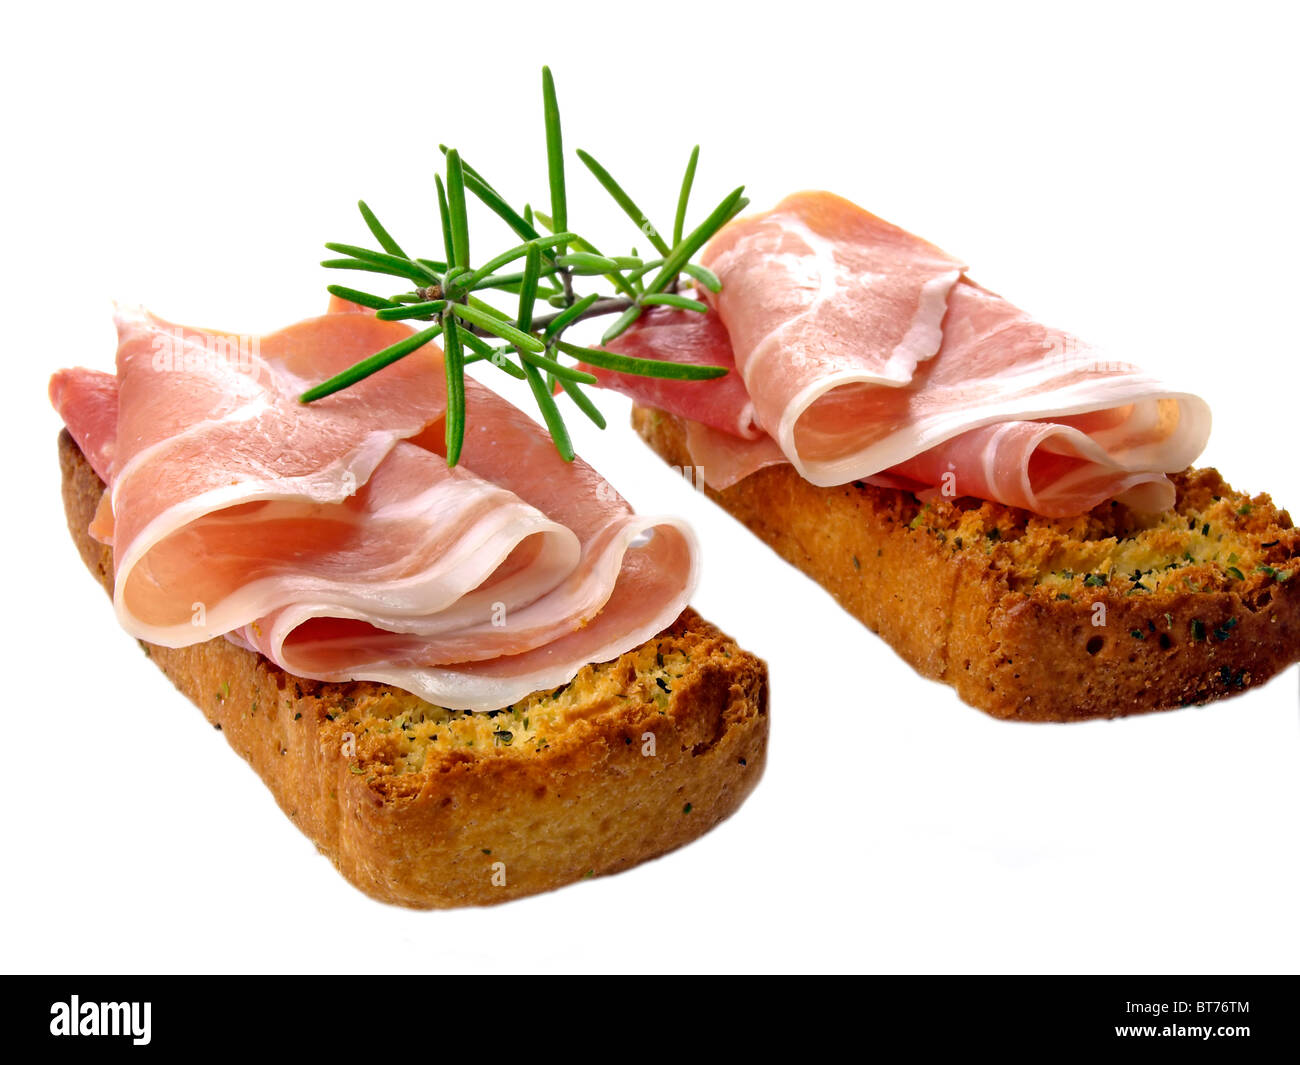 ham of Italy on a bruschetta bread with rosemary Stock Photo